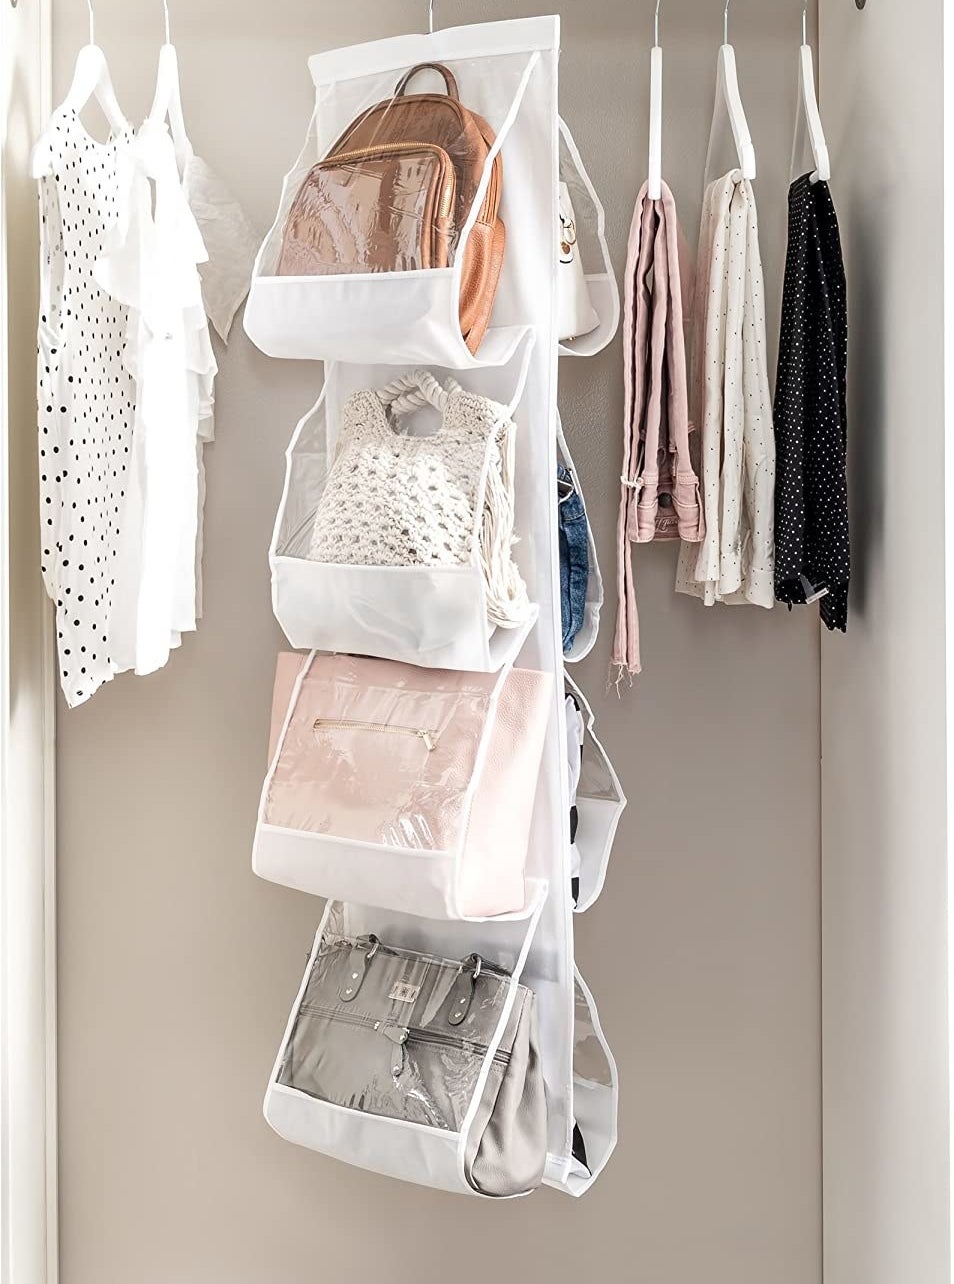 Eight handbags inside the handbag organizer in a closet